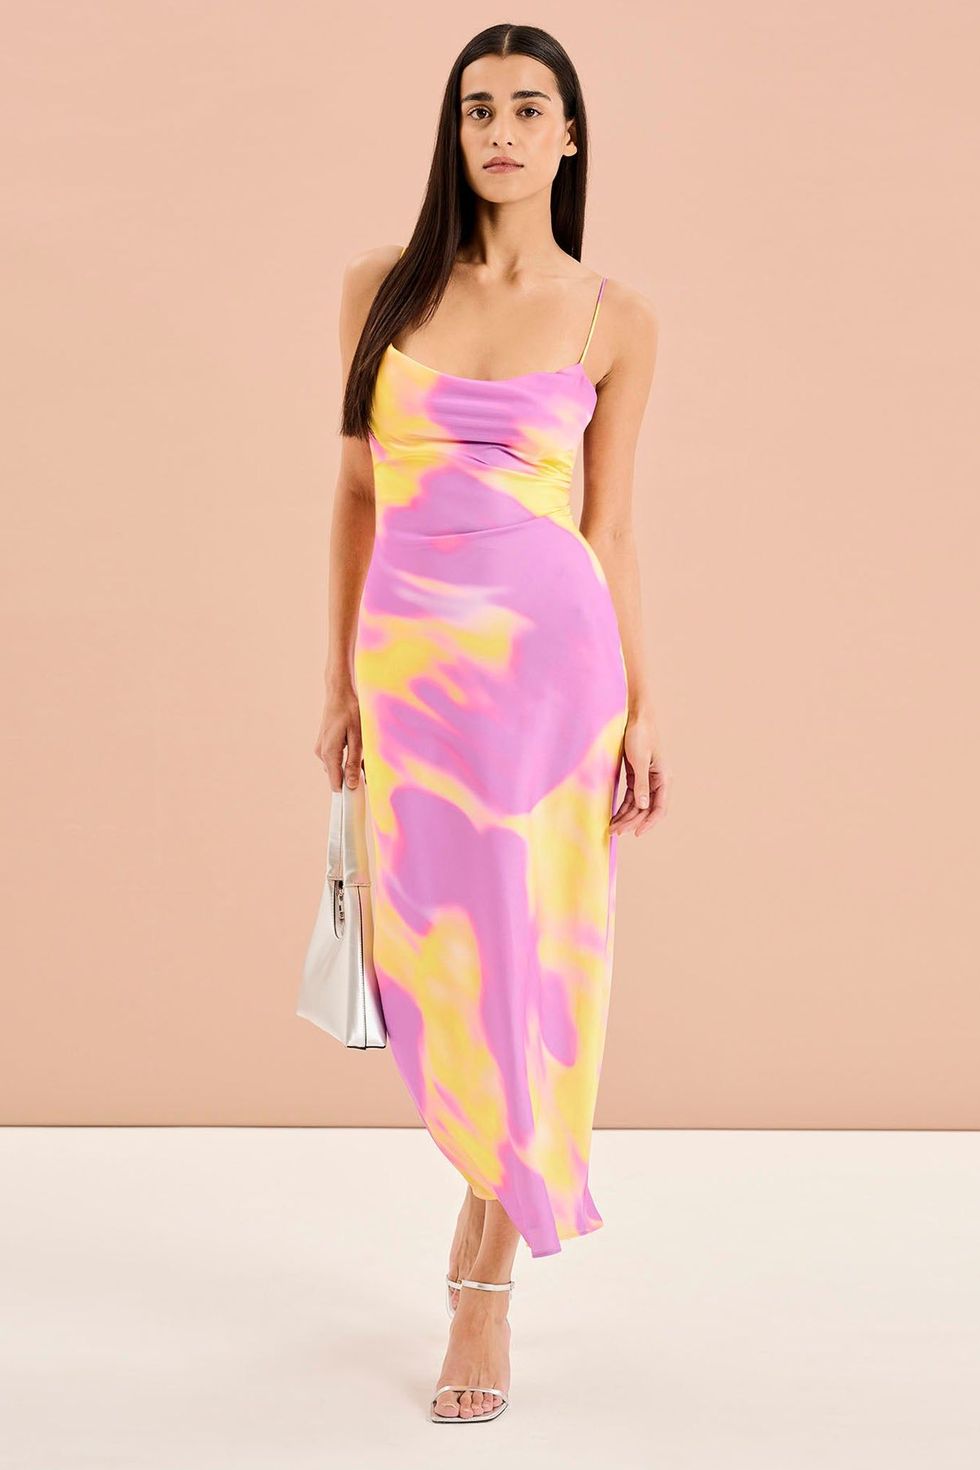 Riviera dress in abstract fluro print